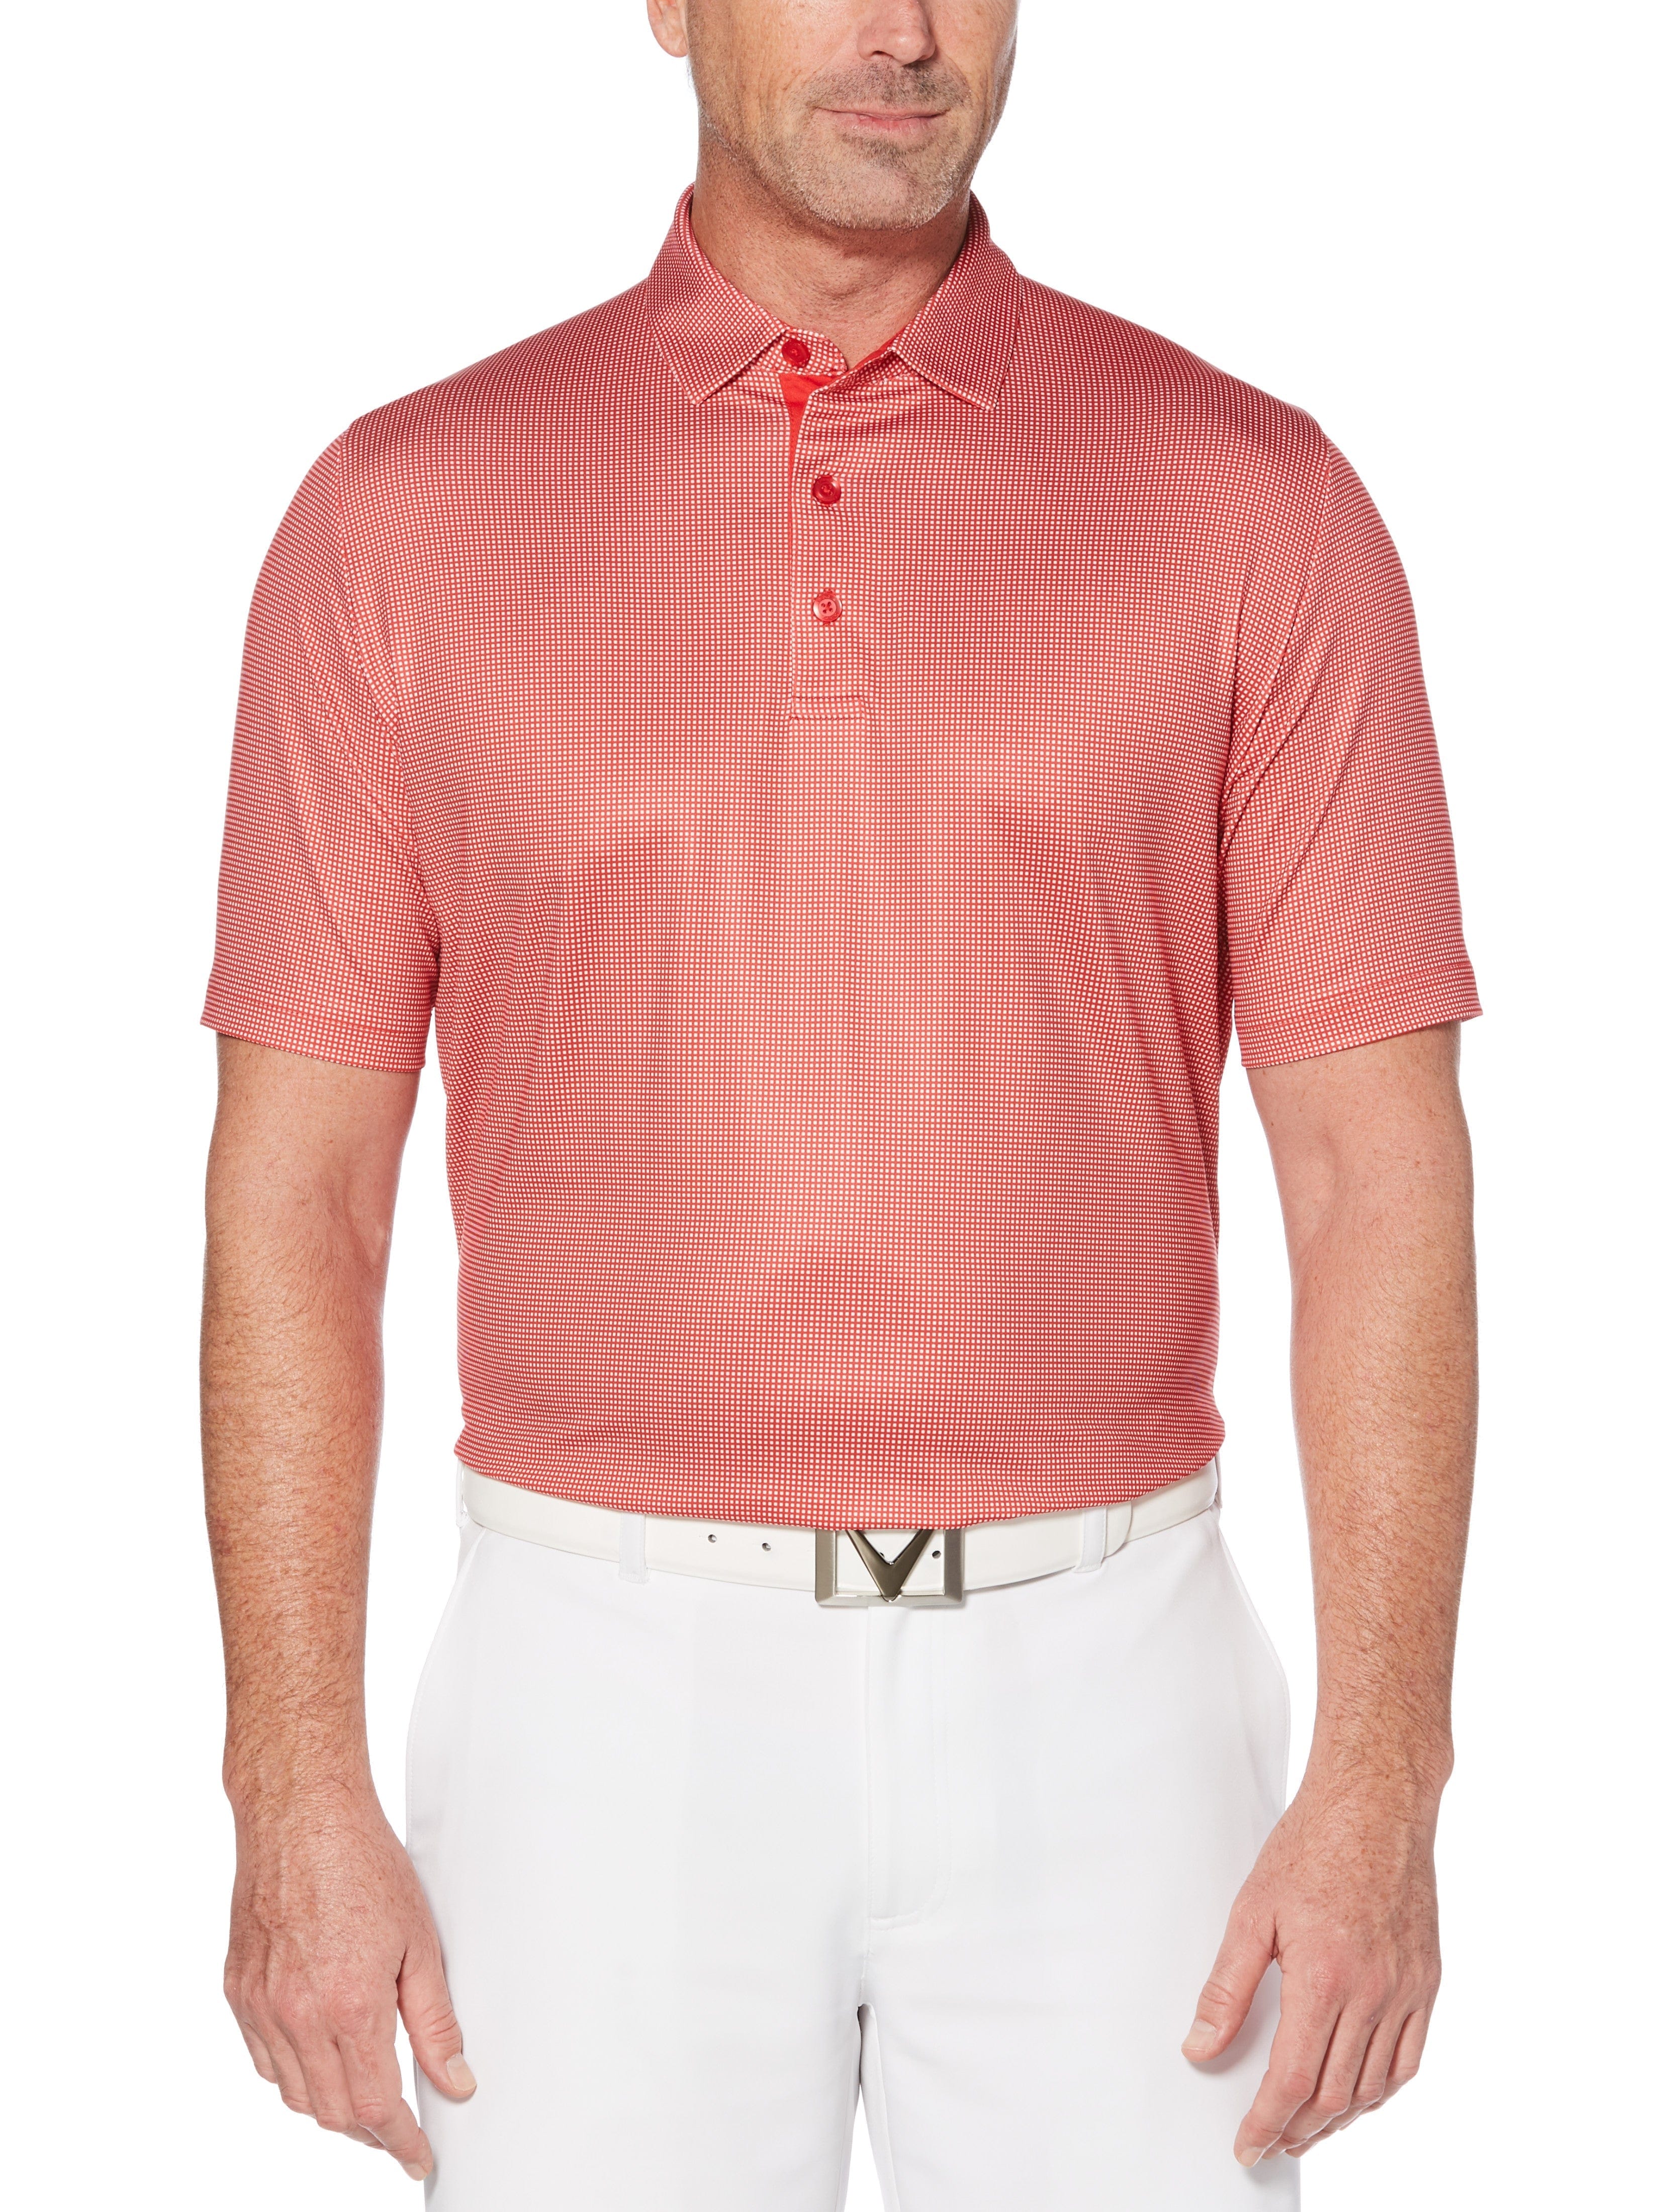 Callaway Apparel Mens Swing Tech Printed Gingham Polo Shirt, Size Medium, Tango Red, Polyester/Elastane | Golf Apparel Shop